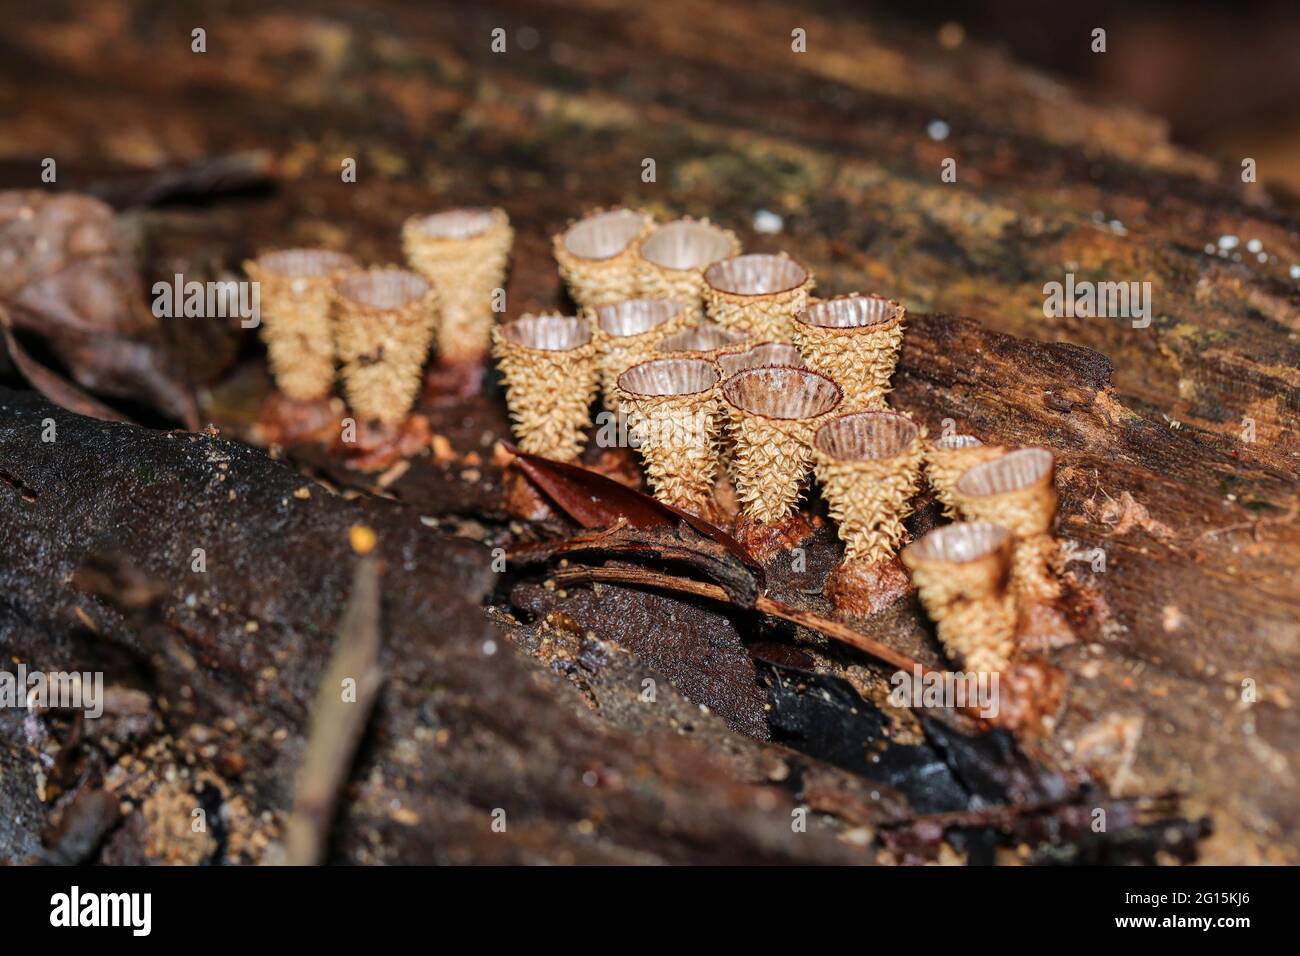 Un grupo de hongos nidos de aves, Crucibulum laeve de la familia Nidulariaceae, creciendo sobre un tronco de árbol en descomposición Foto de stock